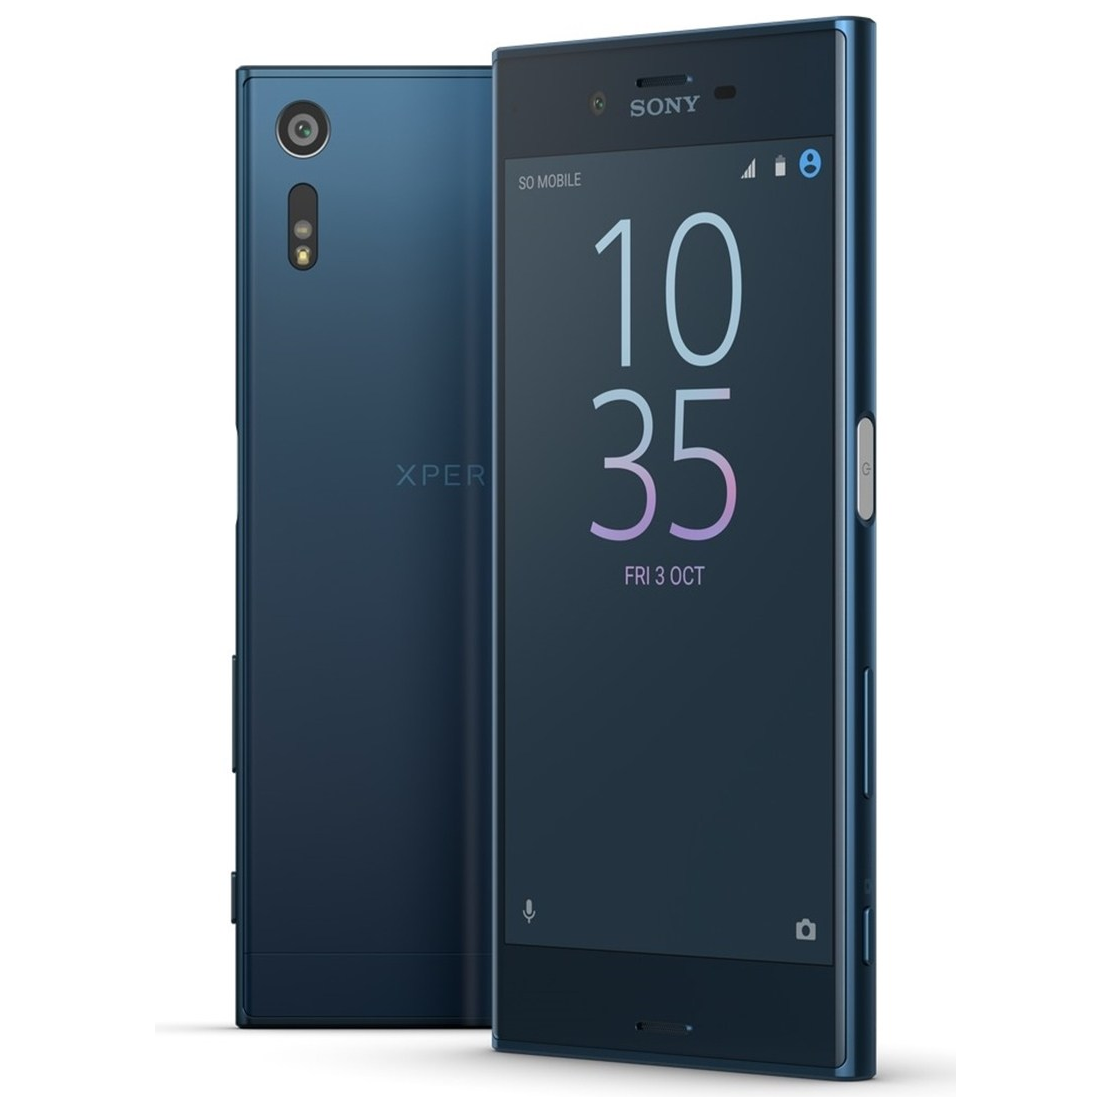 Sony Xperia XZ - 32 GB - Forest Blue - Unlocked - GSM